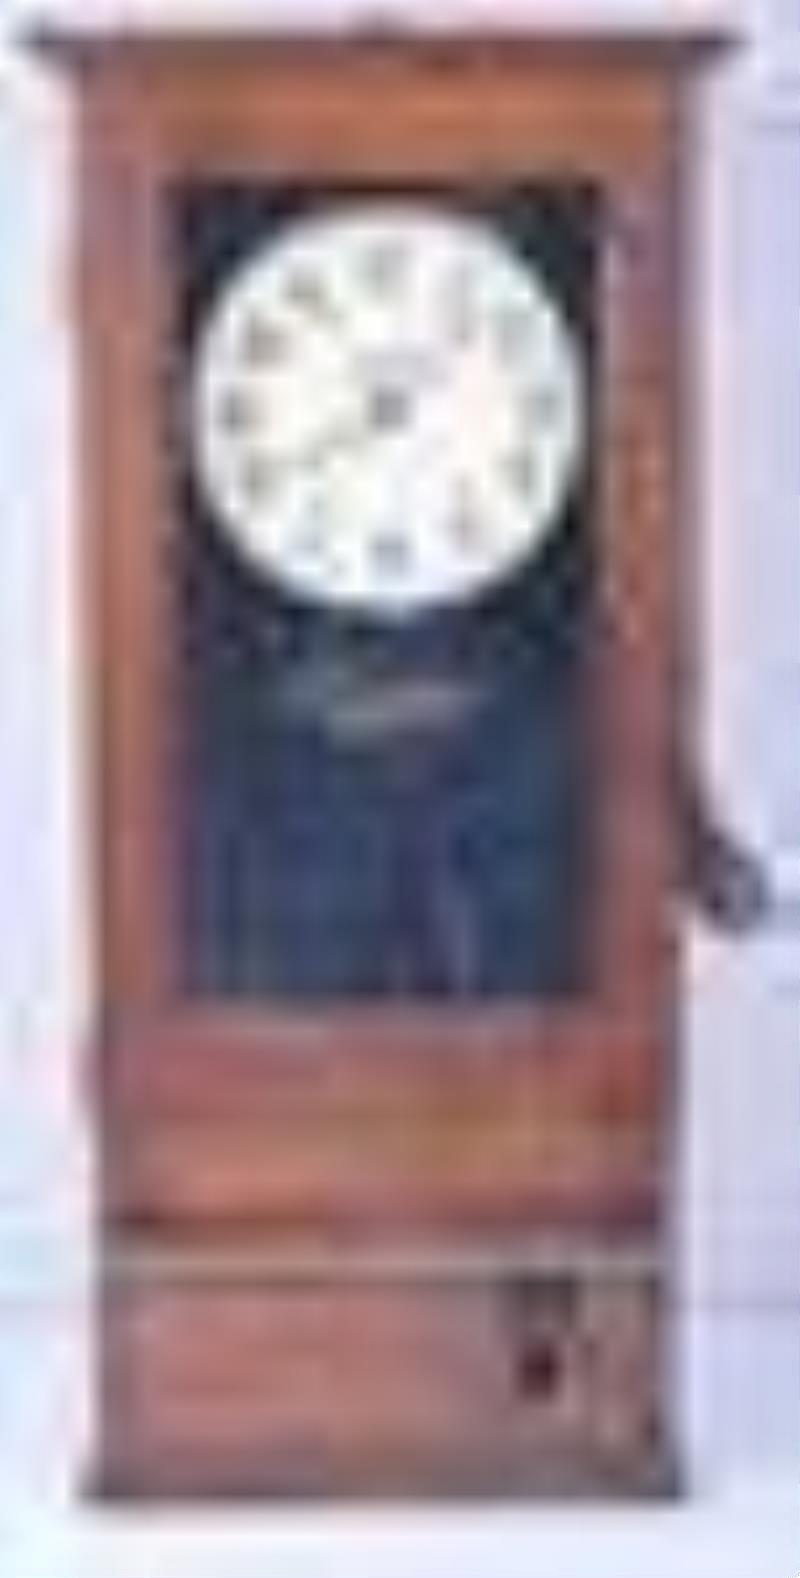 Oak Simplex Time Recorder Co slave clock